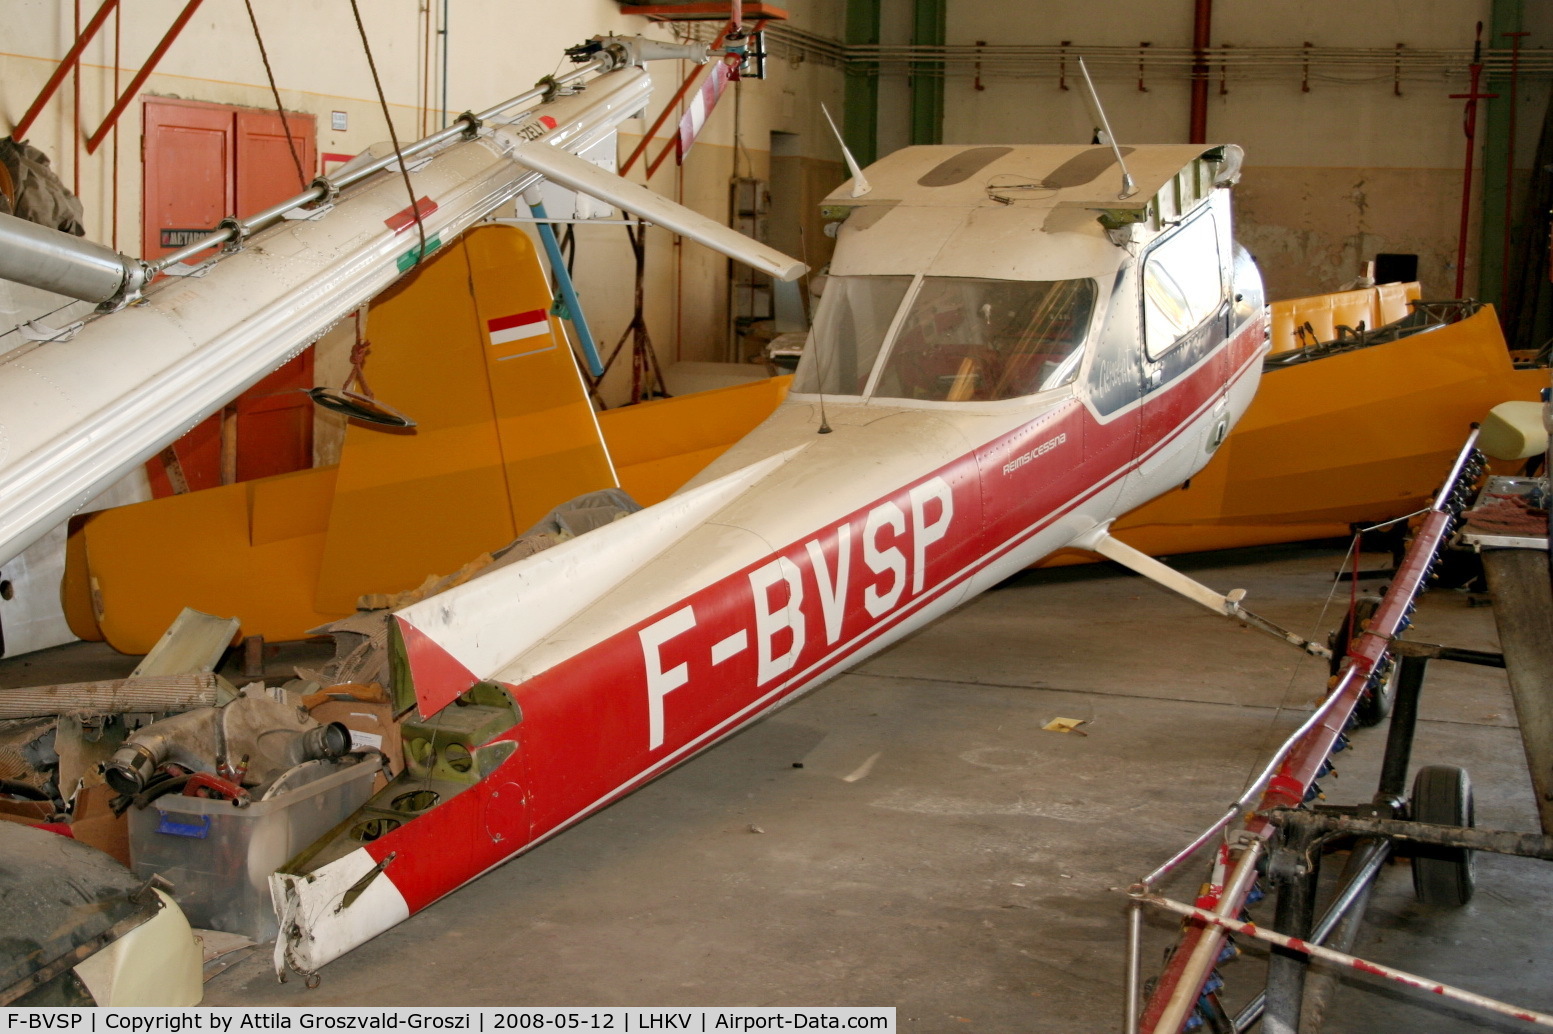 F-BVSP, Reims FRA150L Aerobat C/N 0248, Hungary-Kaposújlak airport hangar